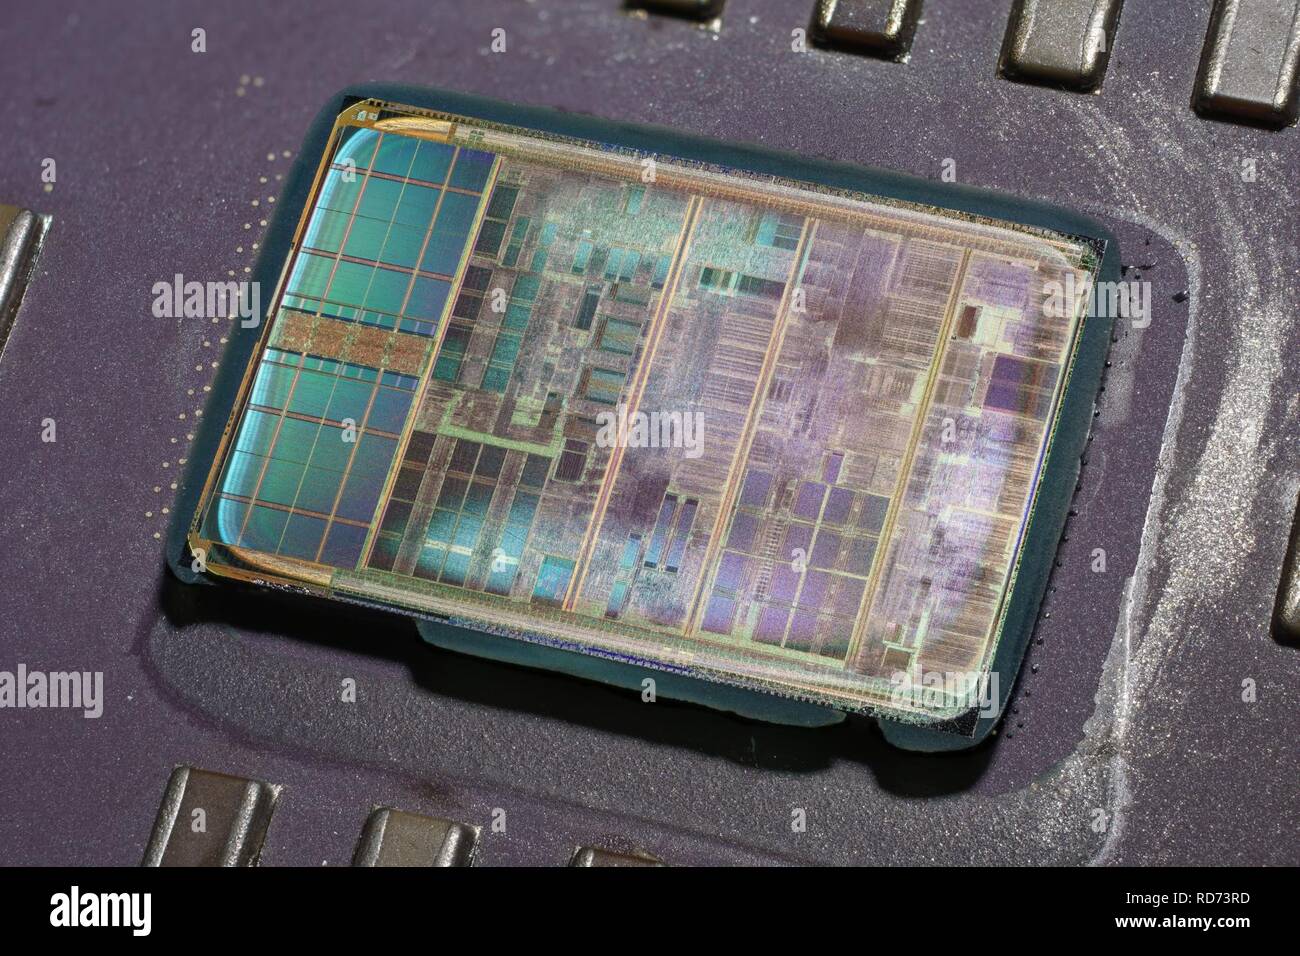 AMD Athlon K7 Thunderbird A0900AMT3B AFFA 0031RPBW Stack- Stock Photo